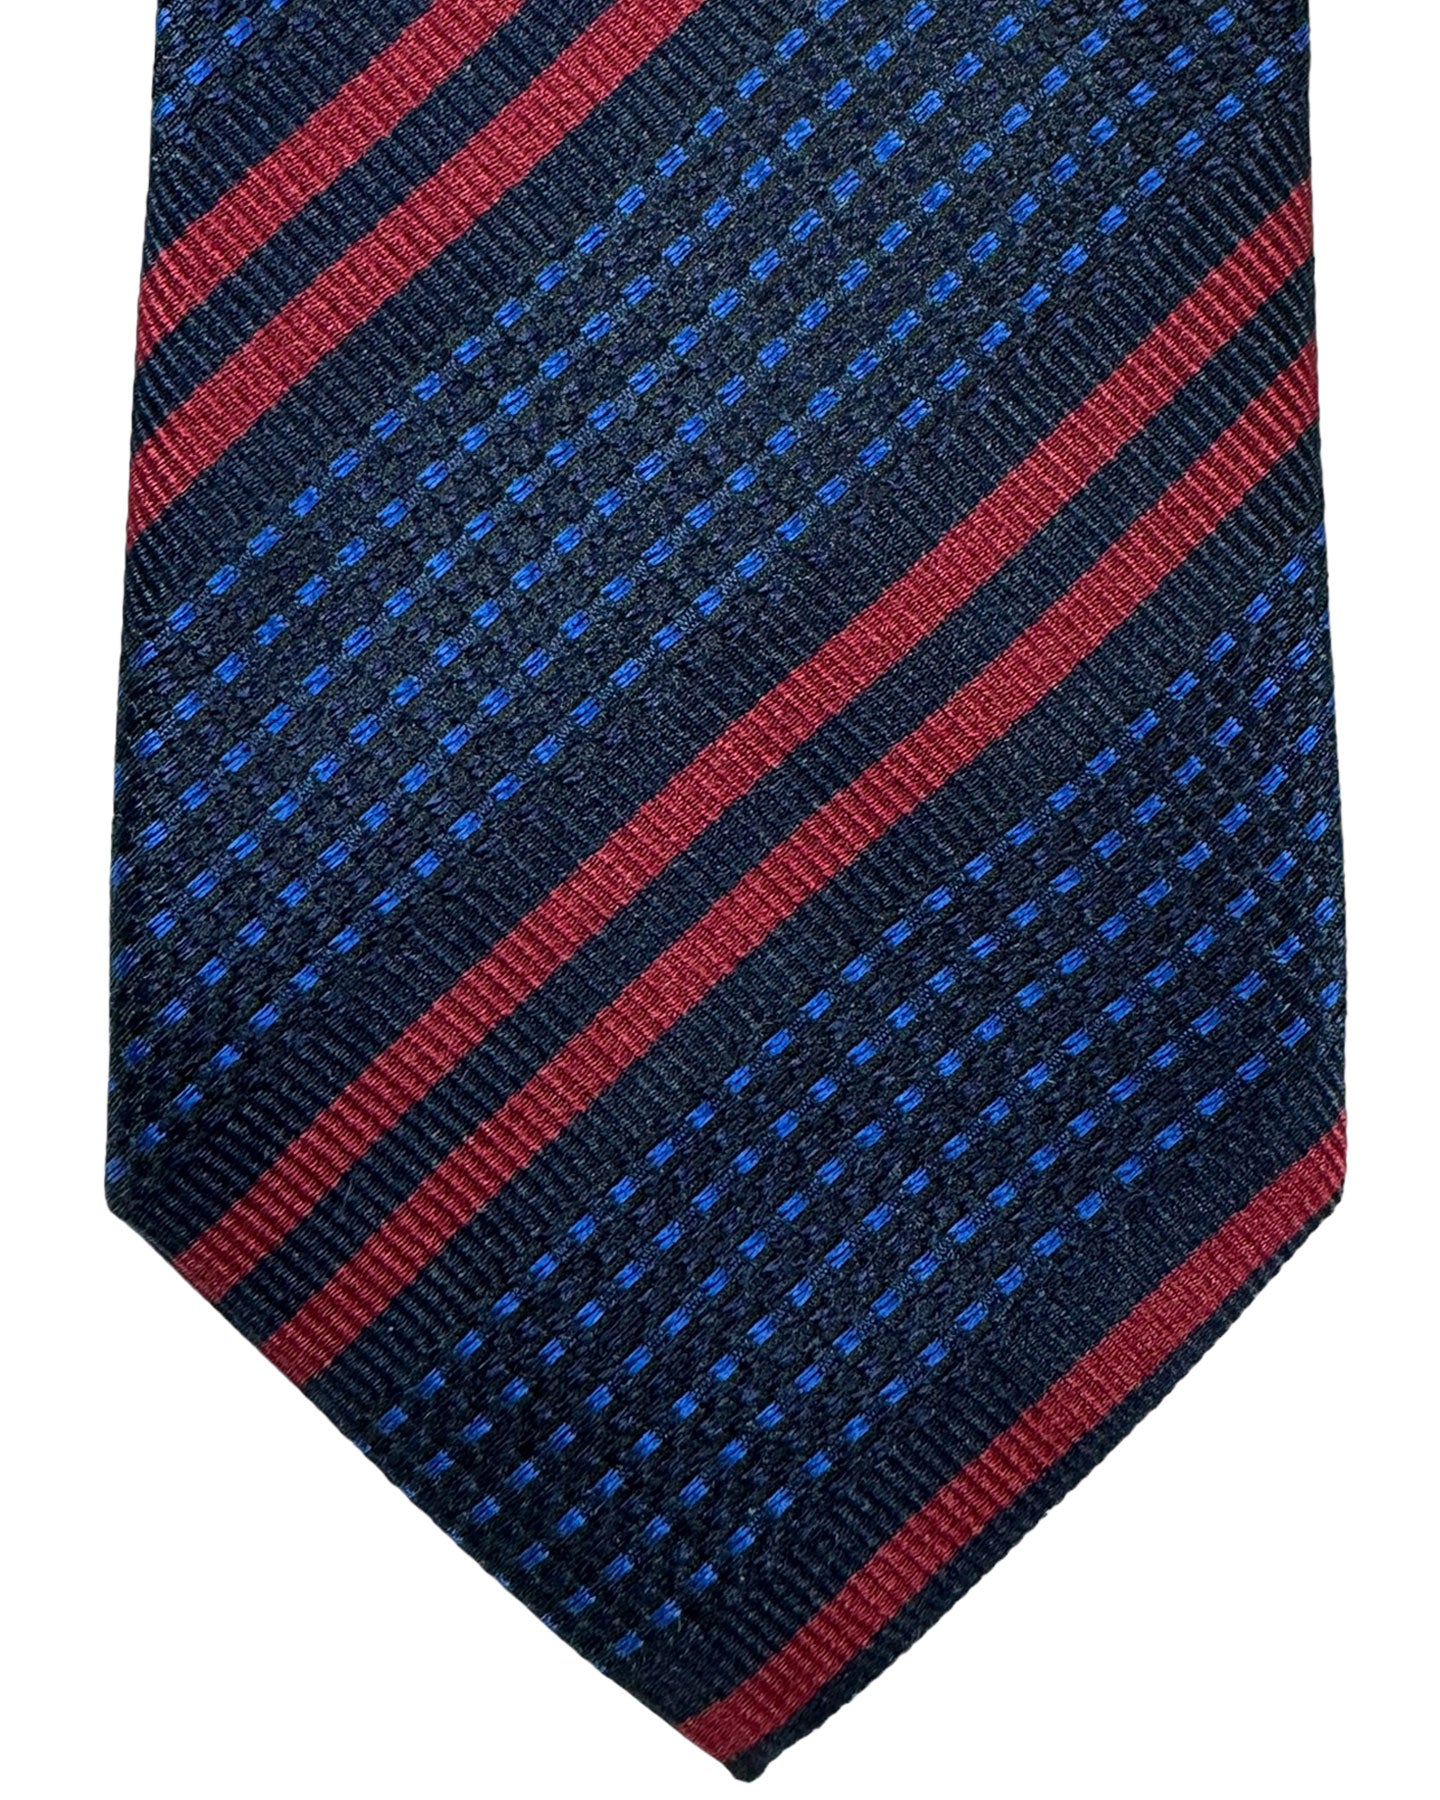 Canali Silk Tie Navy Royal Blue Maroon Stripes Pattern